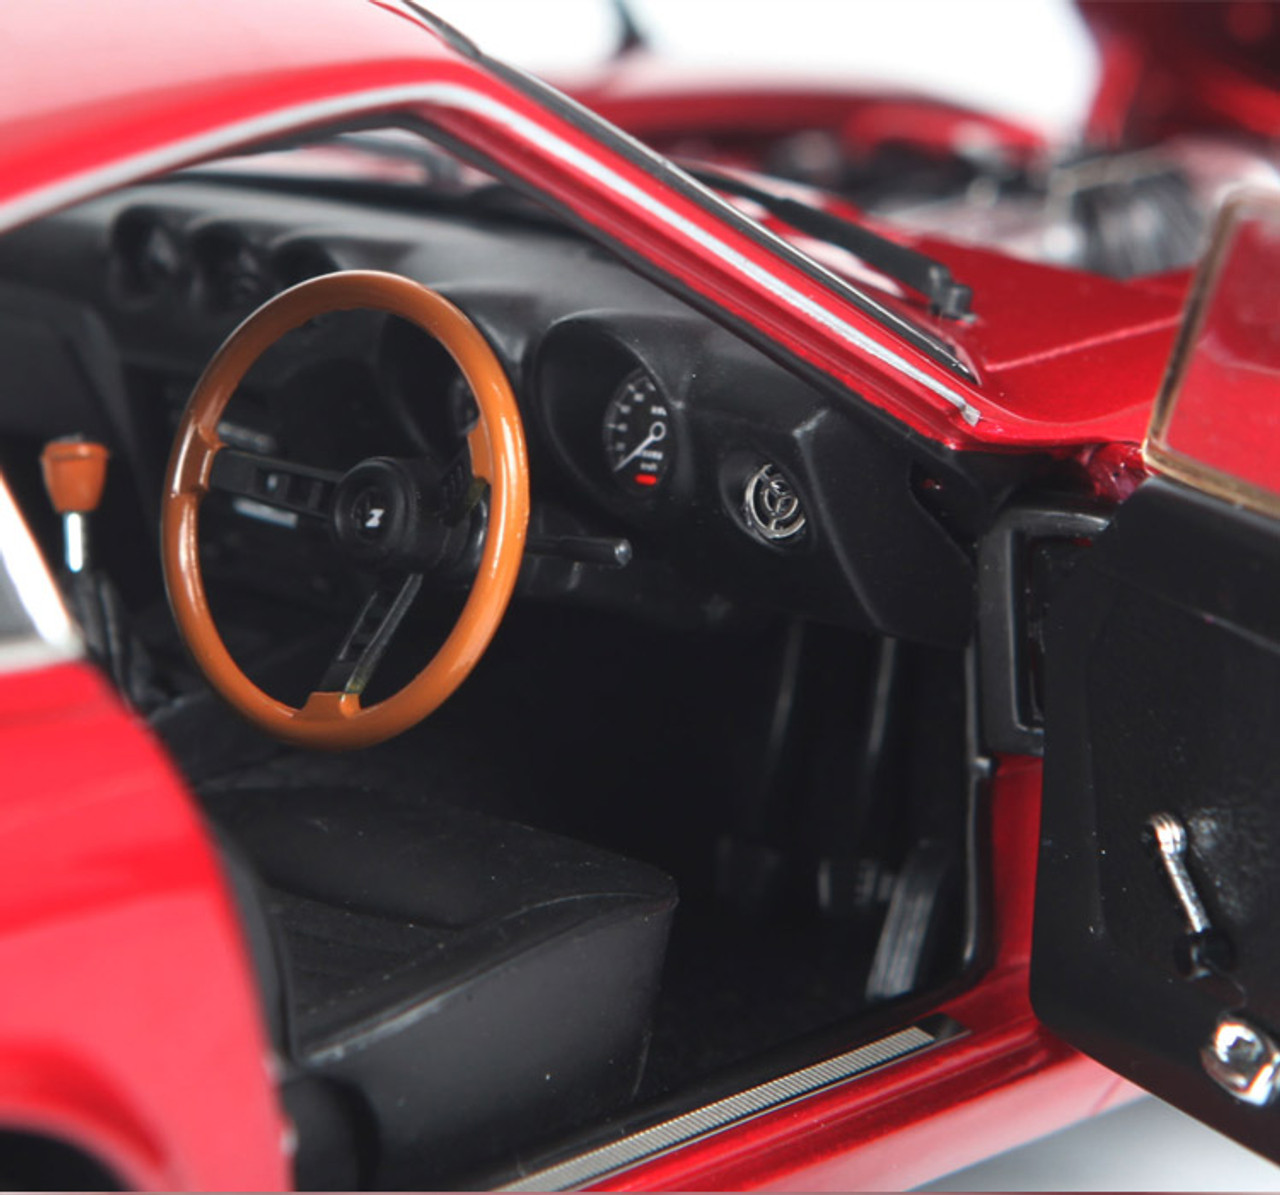 1/18 Kyosho Nissan Fairlady Z (Red) Diecast Car Model